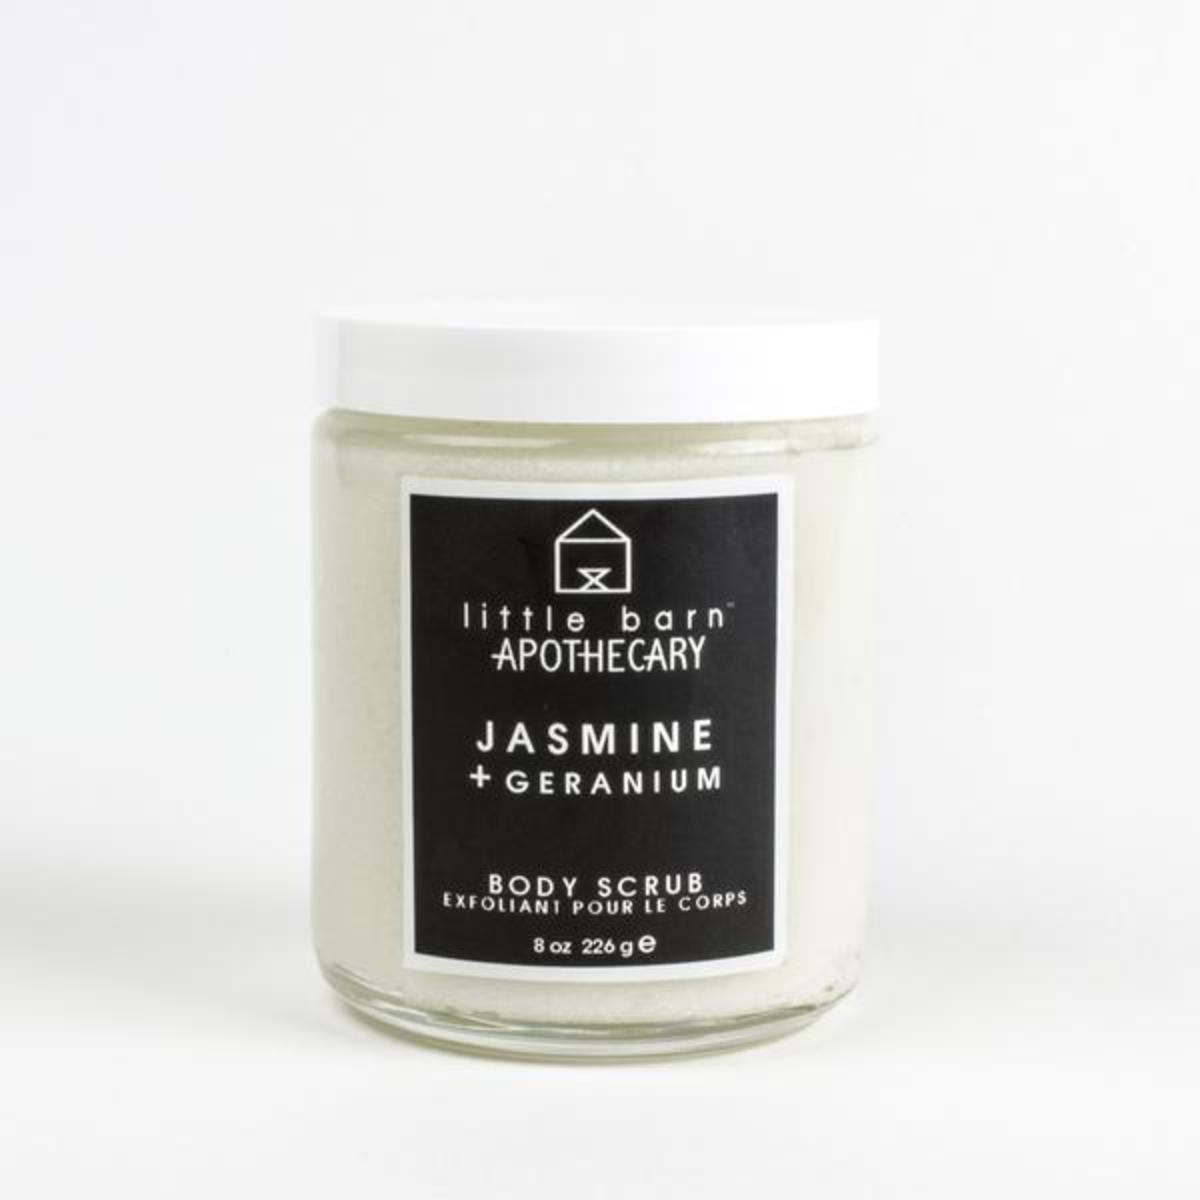 Little Barn Apothecary Jasmine + Geranium Body Scrub